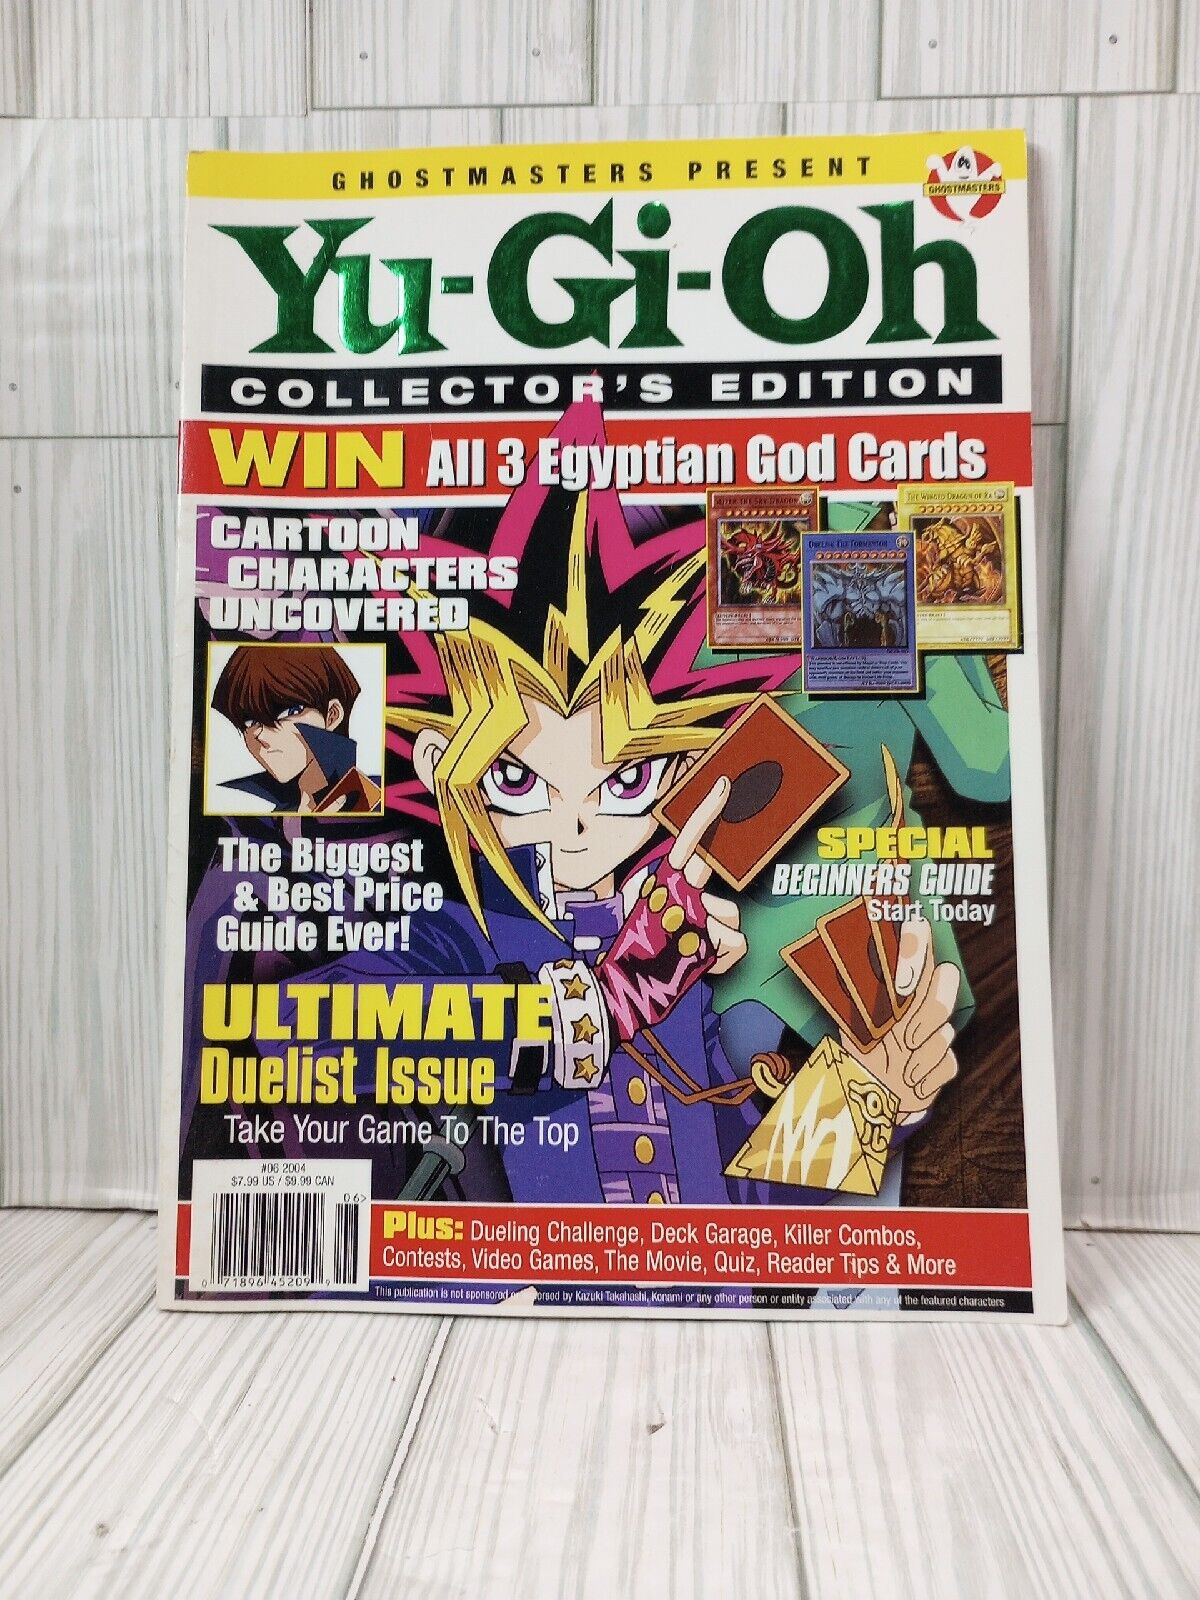 Ghostmasters Present Yu-Gi-Oh Collectors Edition #6 2004 Yu Gi Oh Magazine